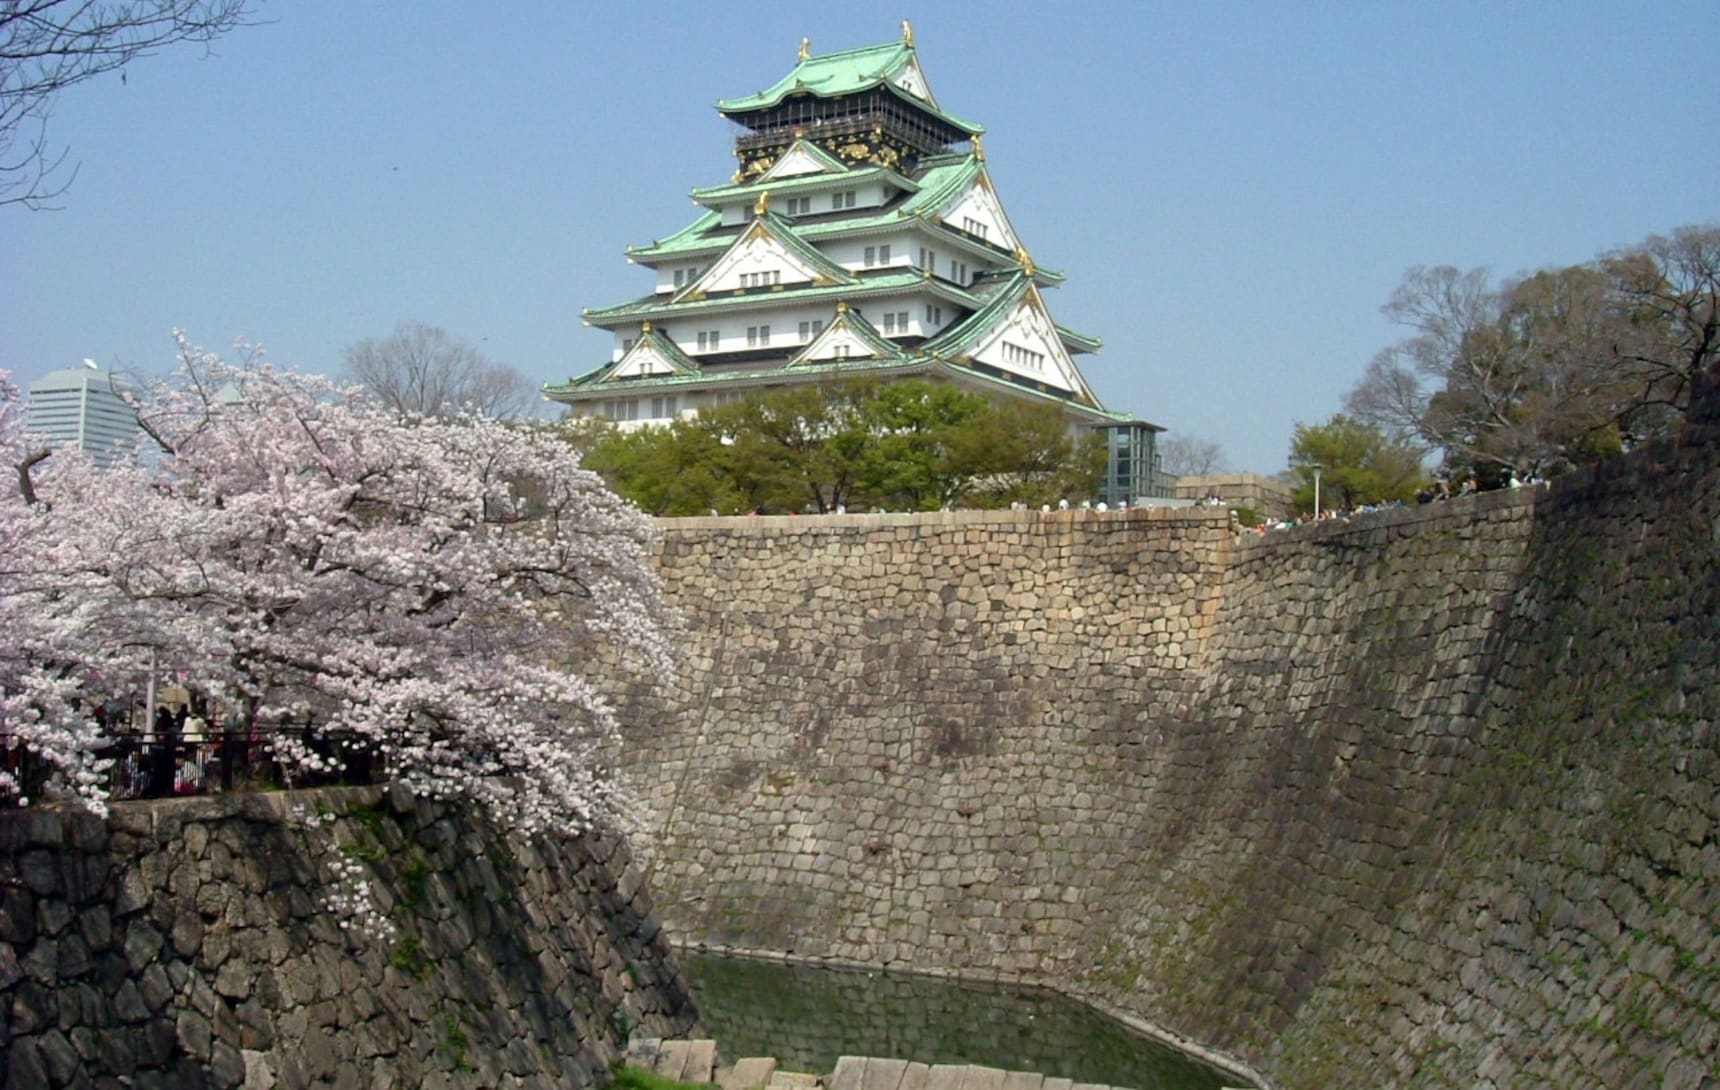 Japan’s Three Famous Castles